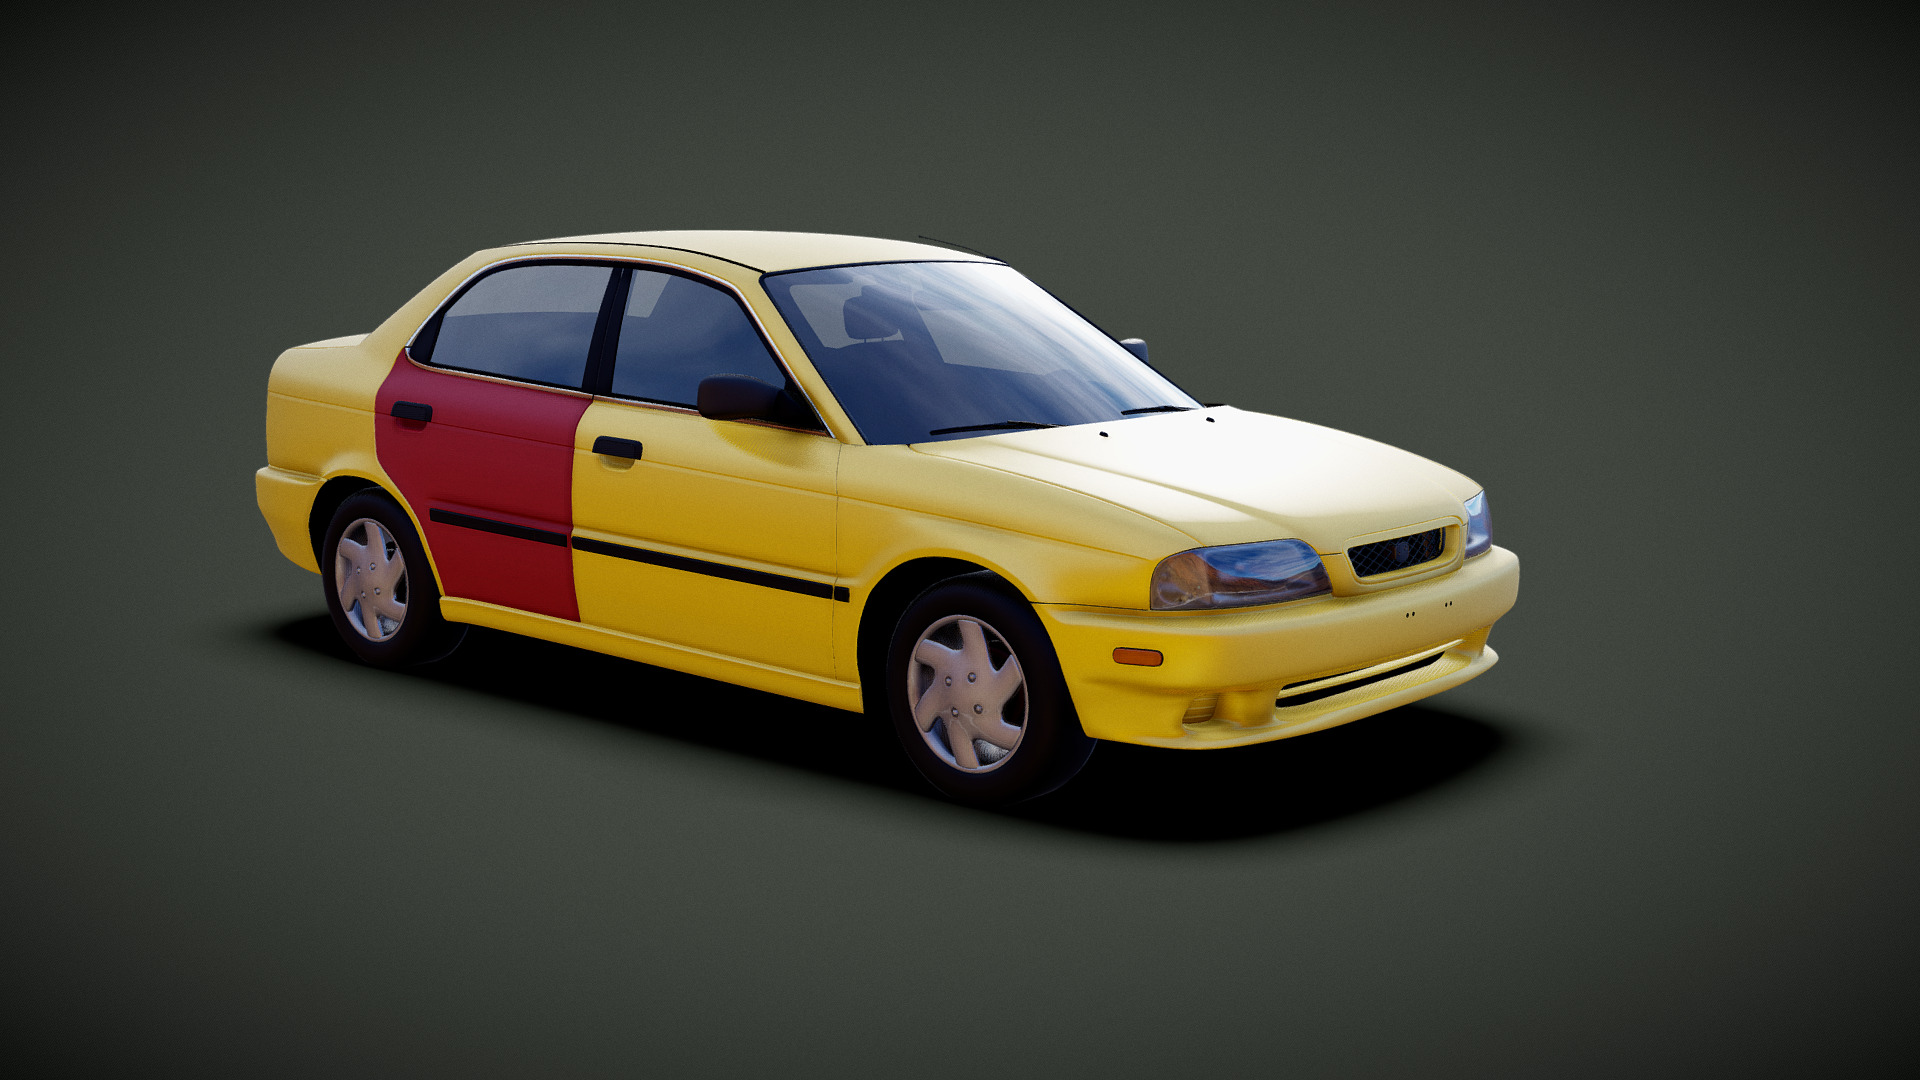 3D model Suzuki Baleno Esteem 1998 - This is a 3D model of the Suzuki Baleno Esteem 1998. The 3D model is about a small yellow car.